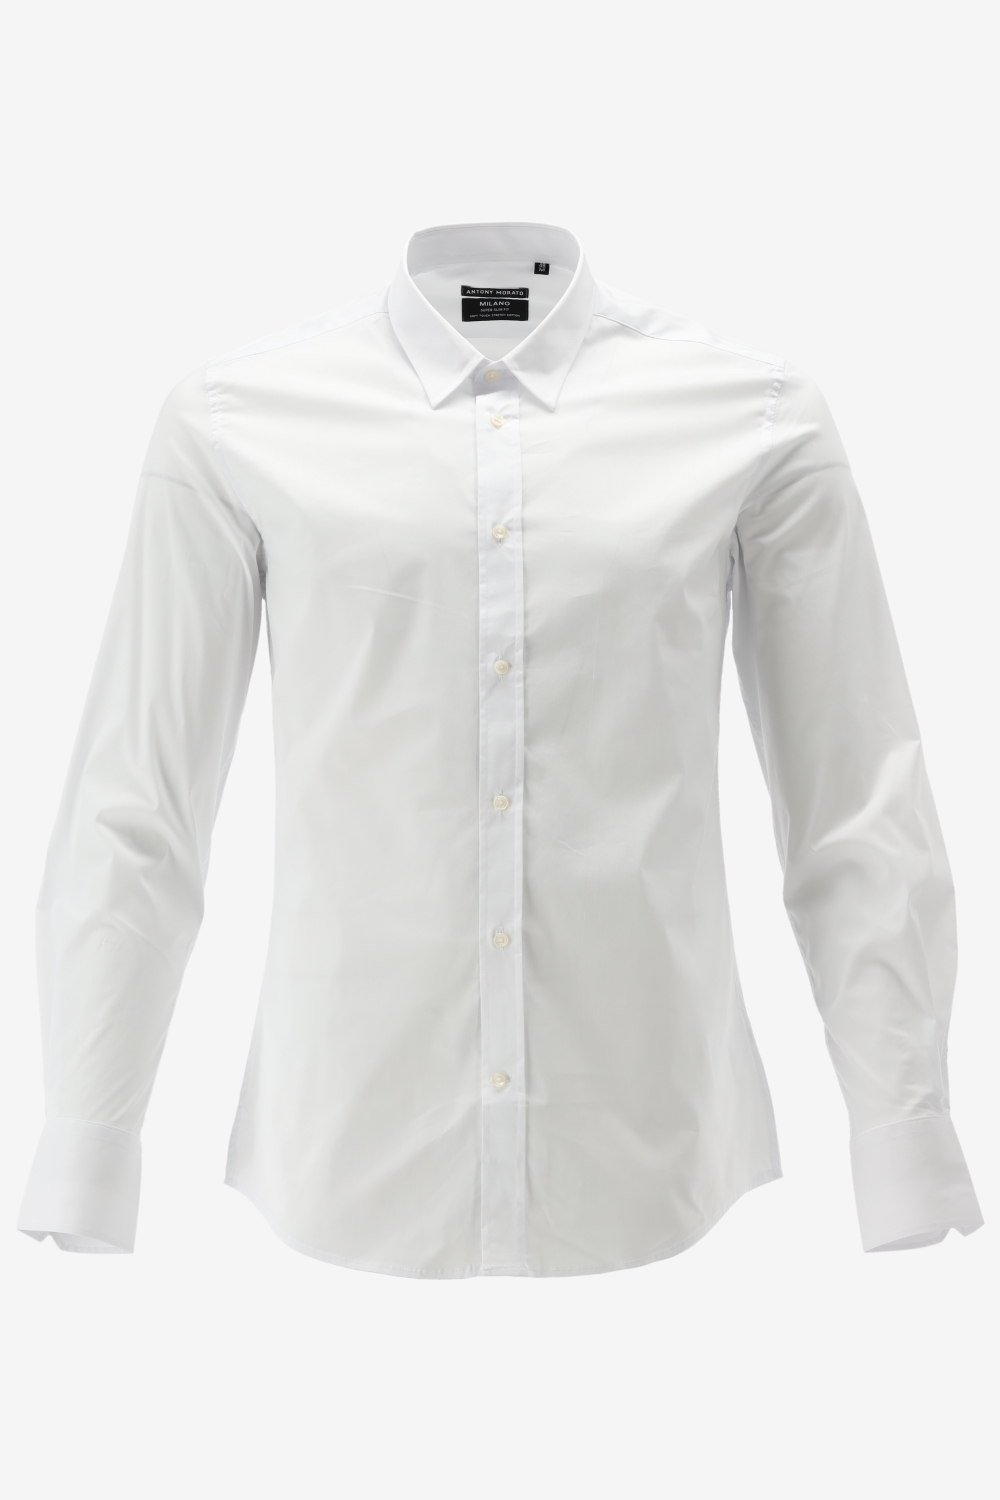 Antony Morato Overhemd Shirt Milano Mmsl00694 Fa450010 1000 White Mannen Maat - 48